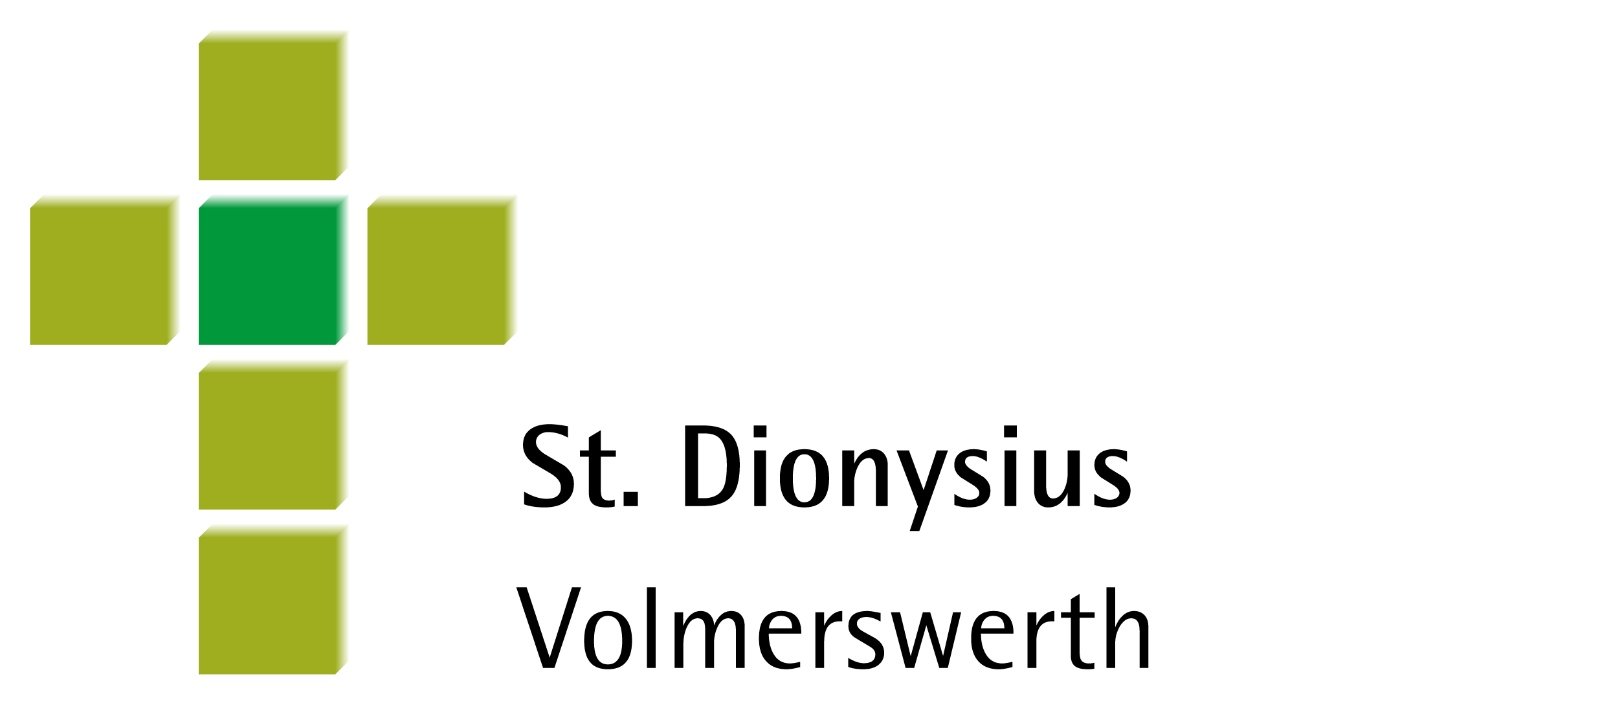 Dionysius (c) kath. Kirchegemeinde St. Bonifatius Düsseldorf